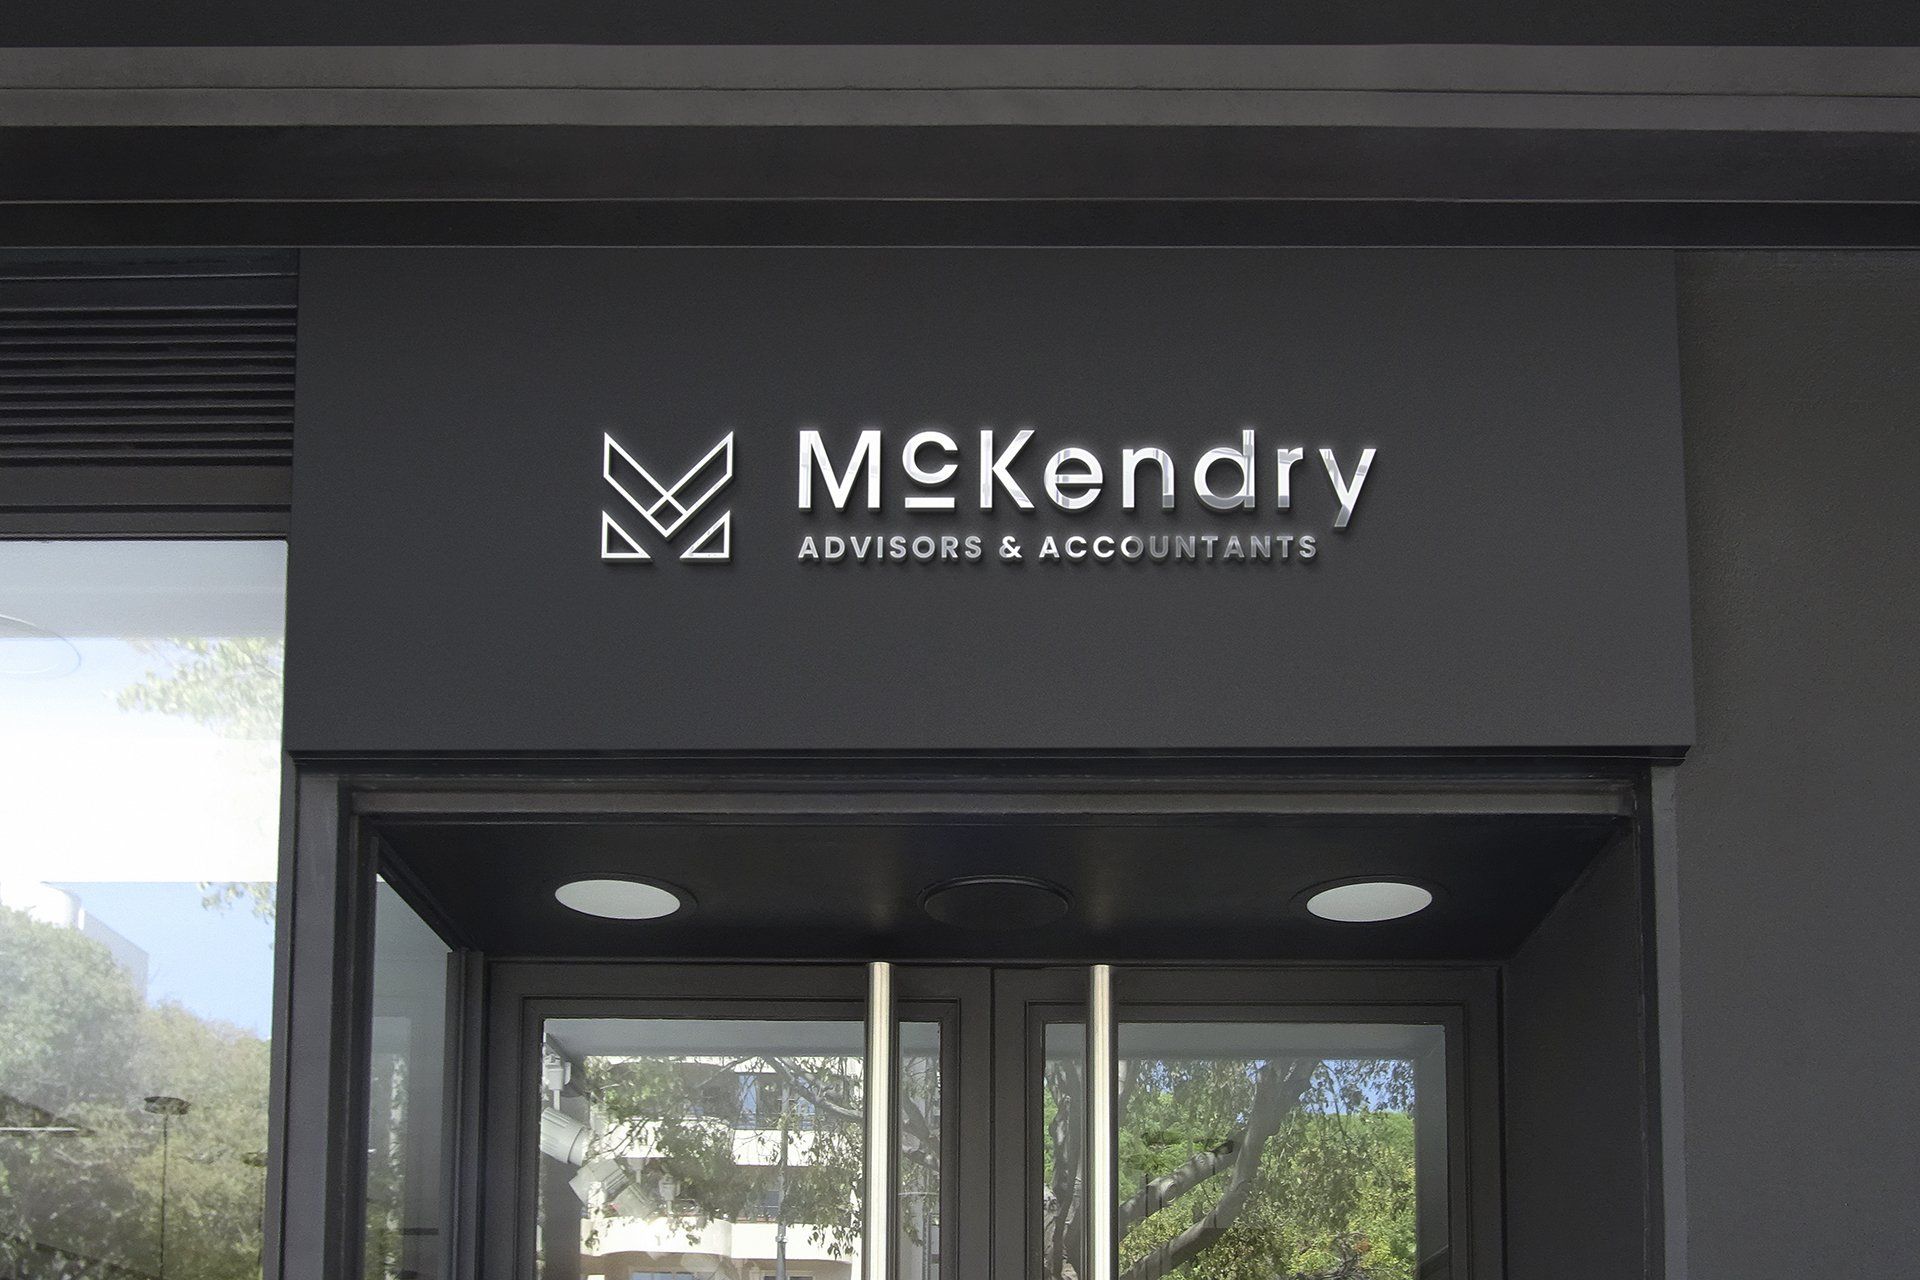 McKendry Advisors and Accountants branding by Vanilla Hayes Ltd in Blenheim, New Zealand